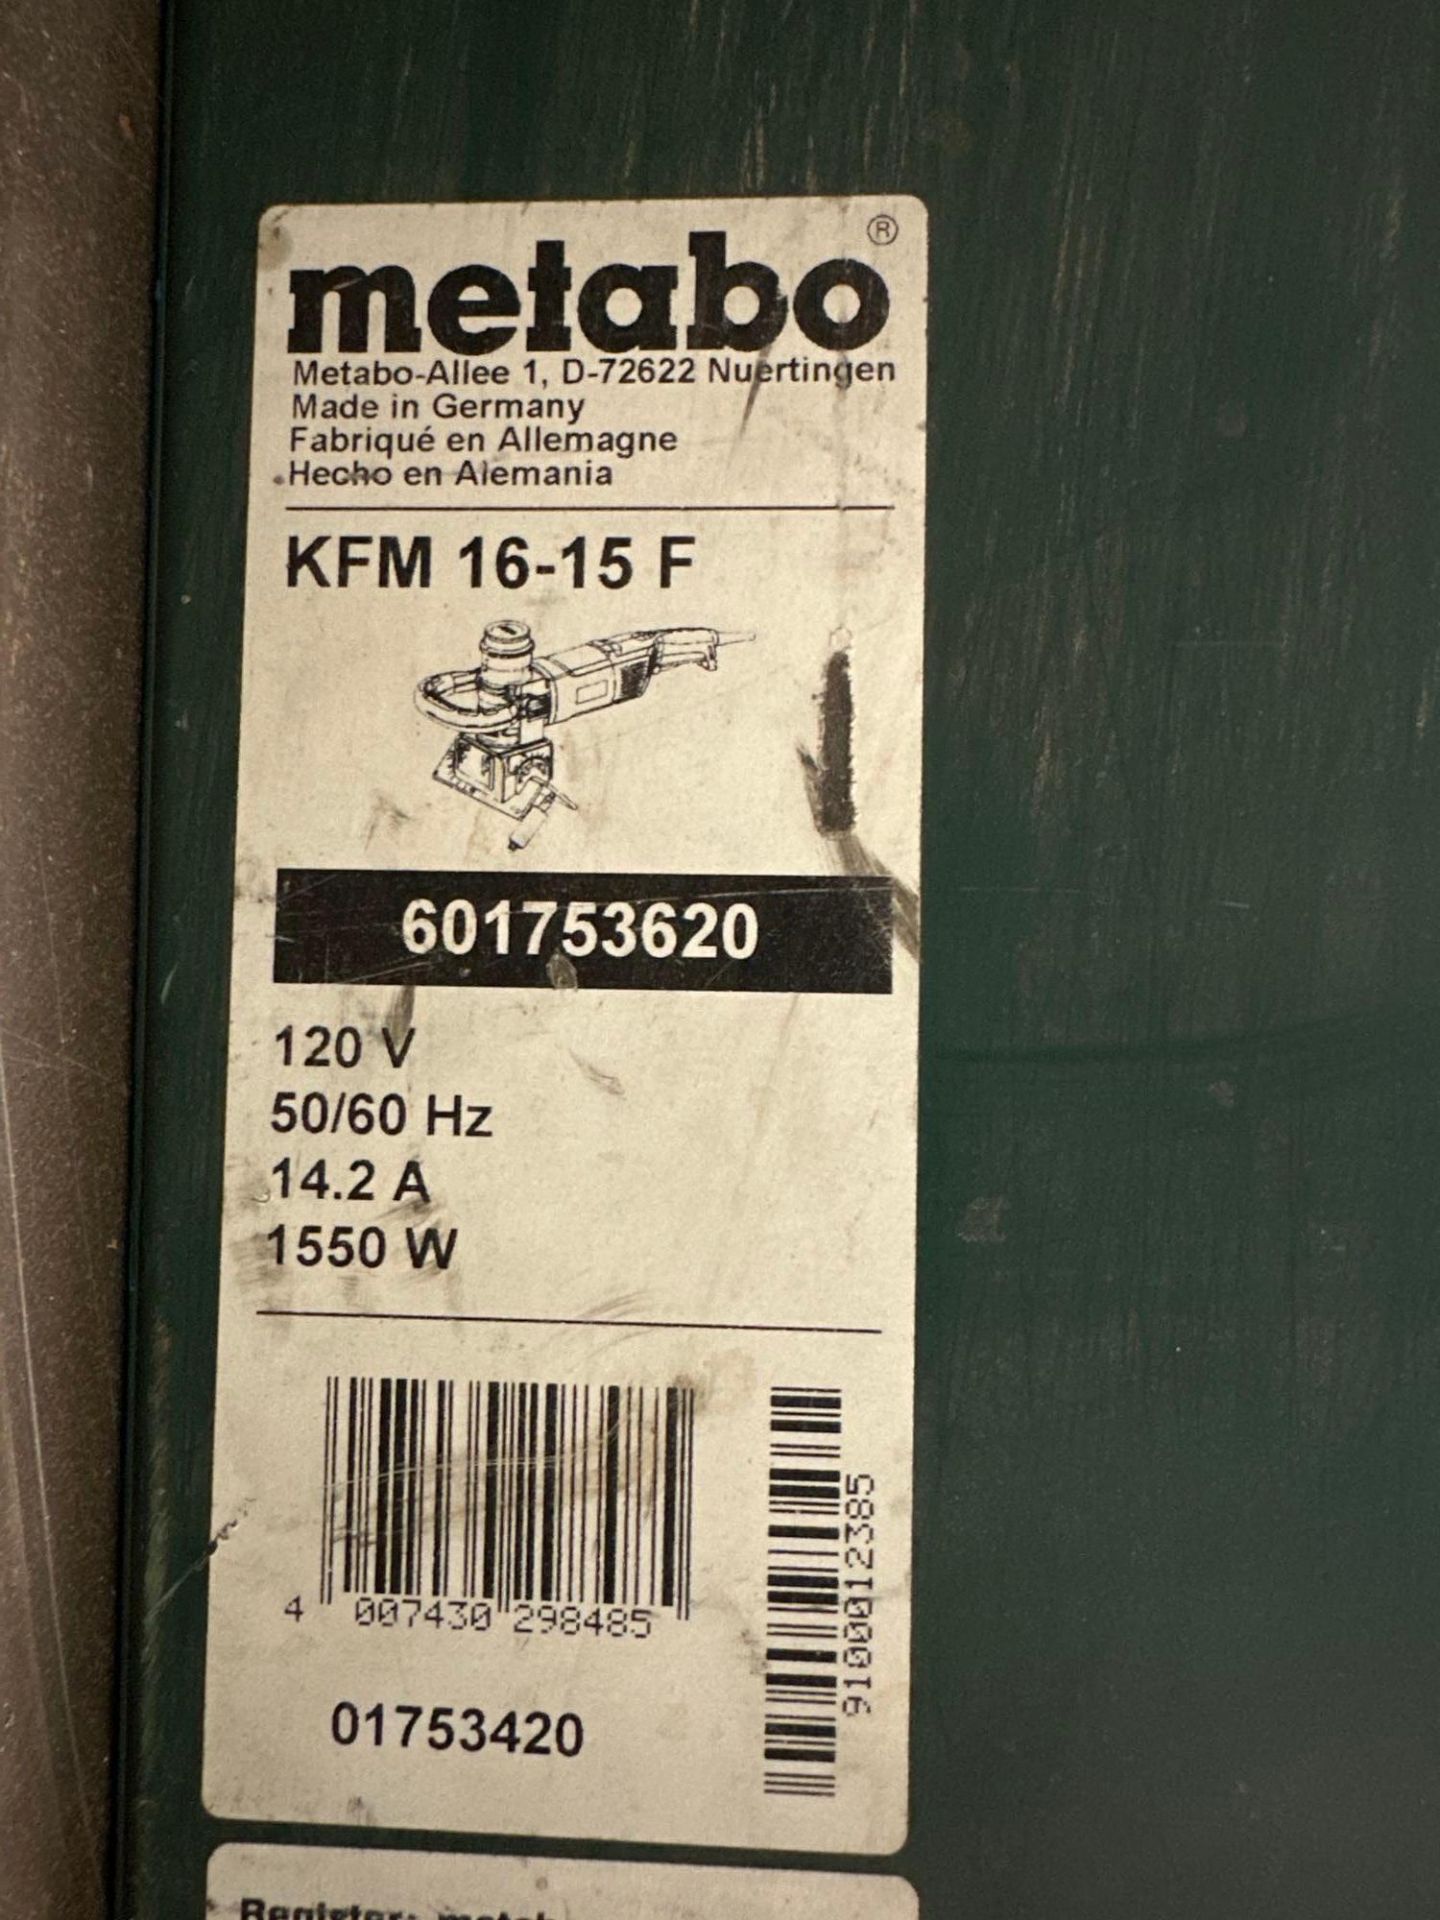 Metabo KFM 16-15 F Metal Bevelling Tool - 601753620 - Image 5 of 5